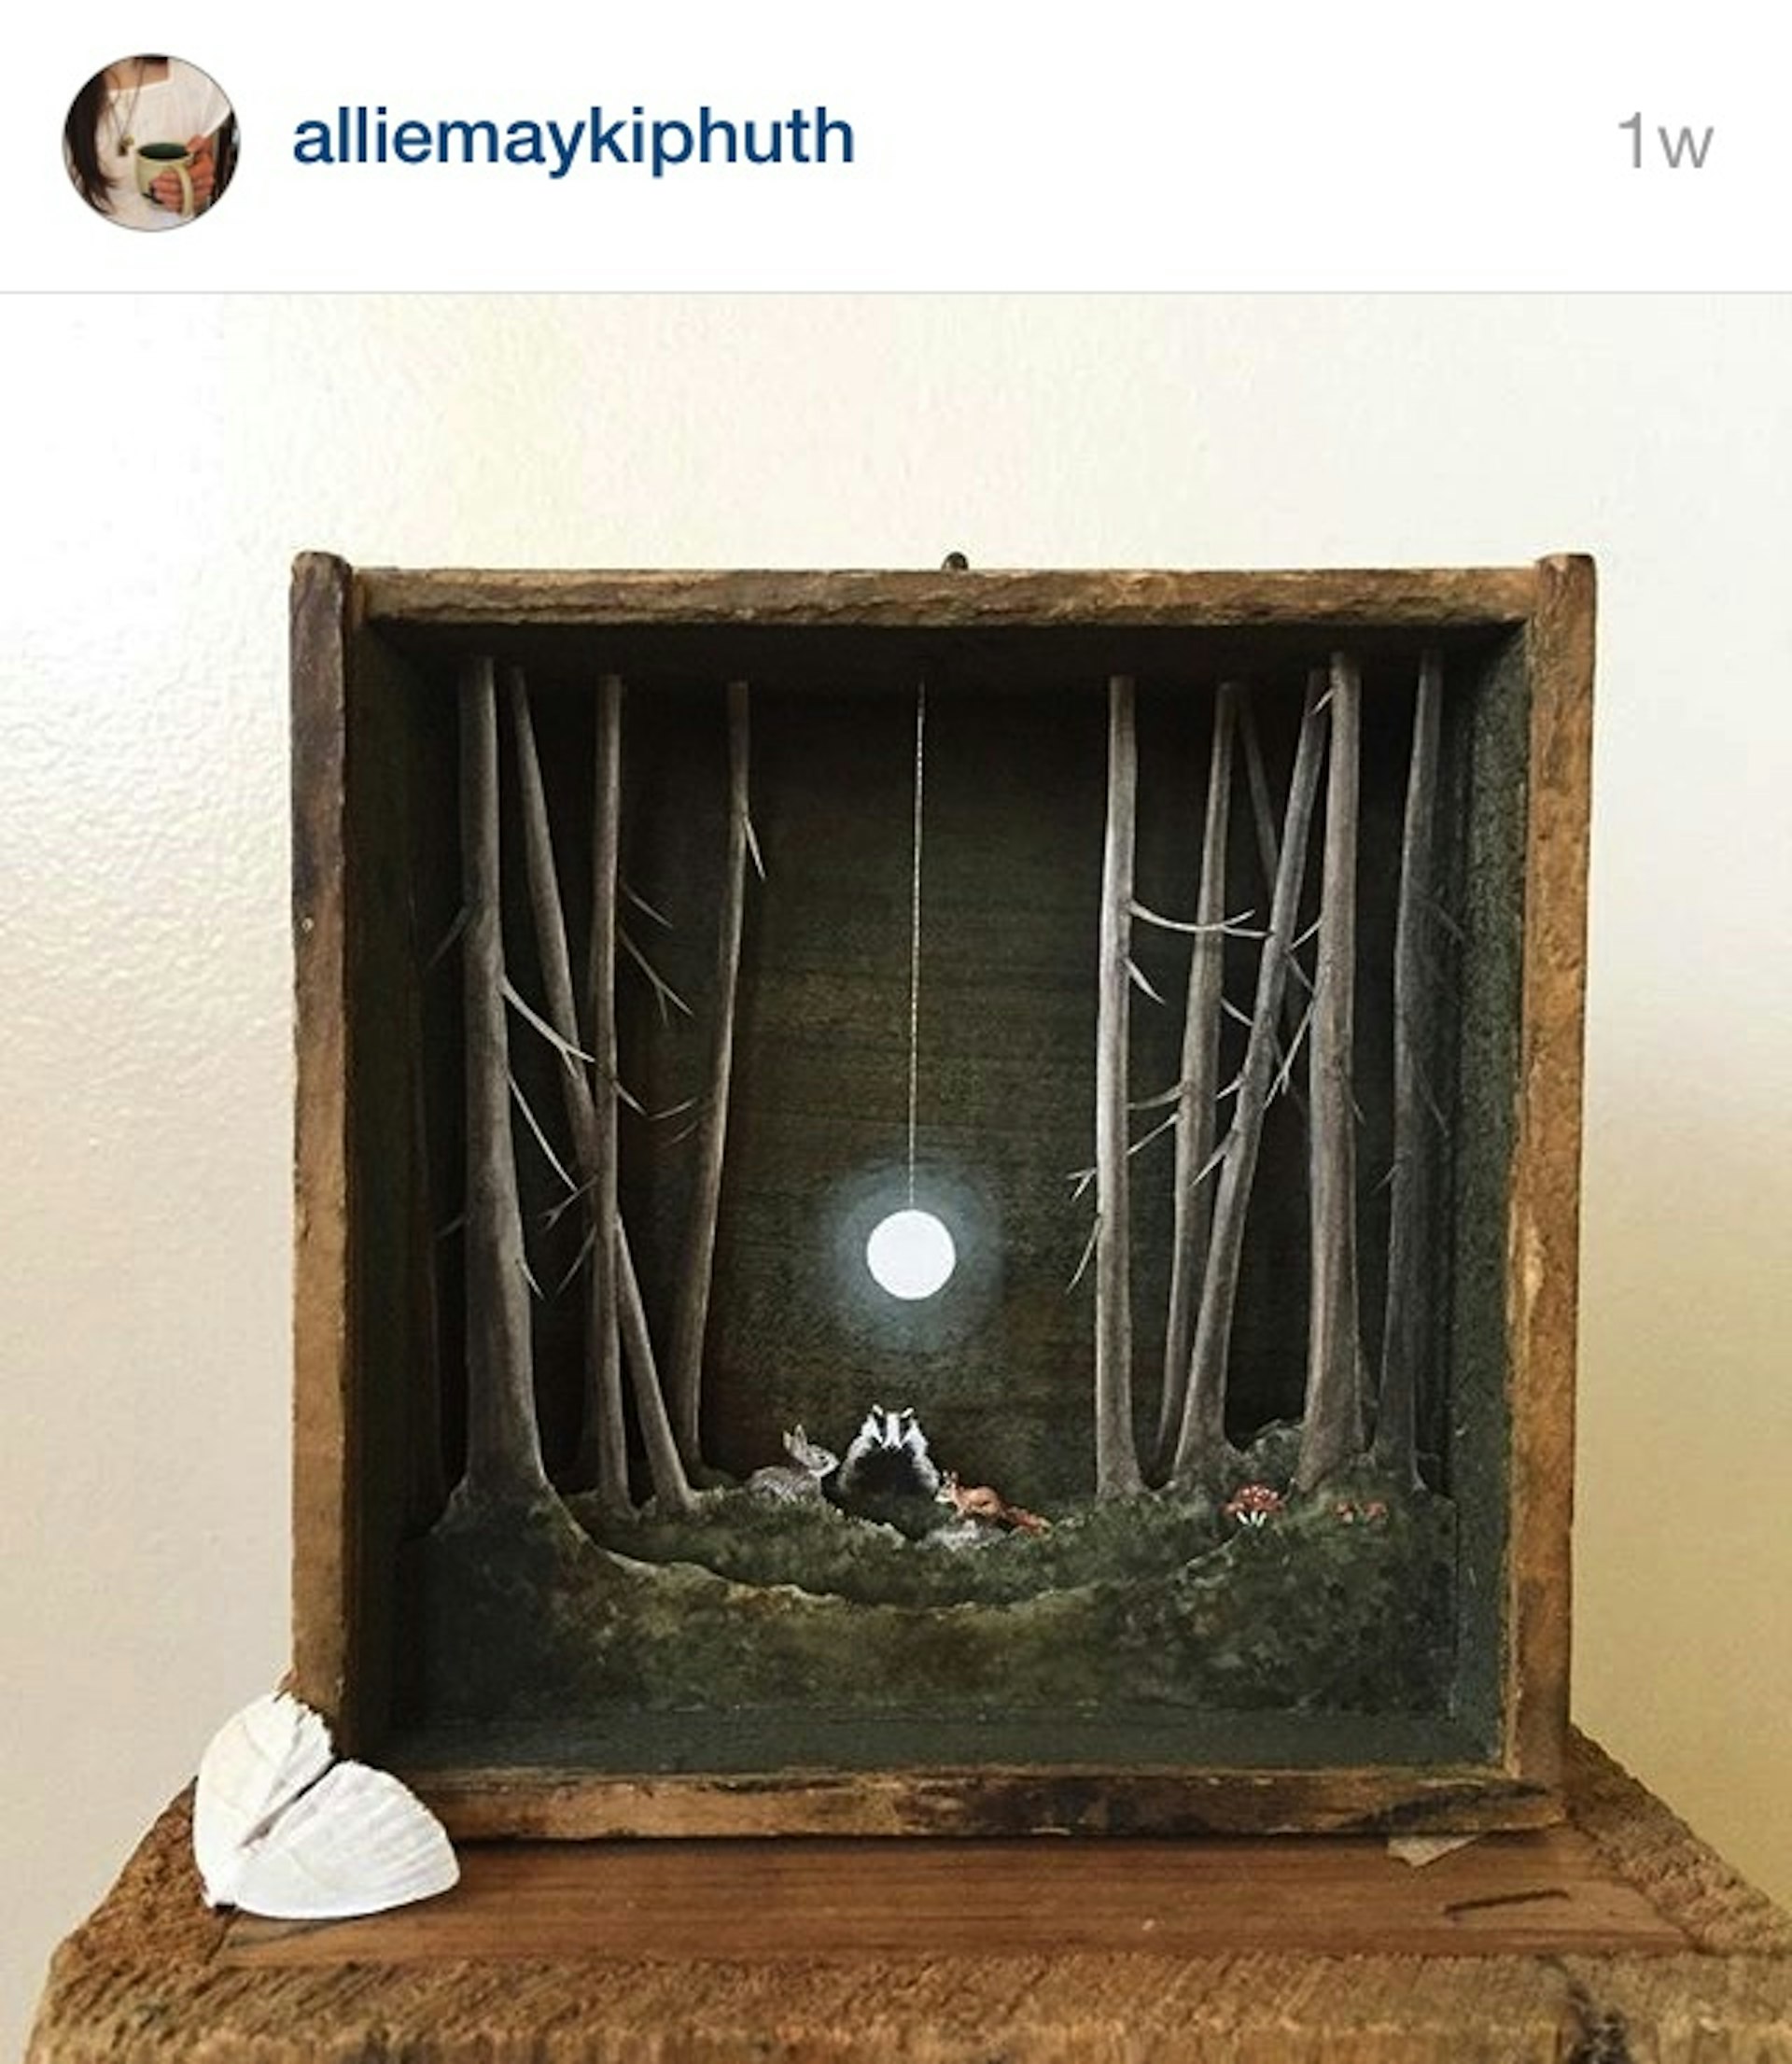 Instagram- Allison May Kiphuth